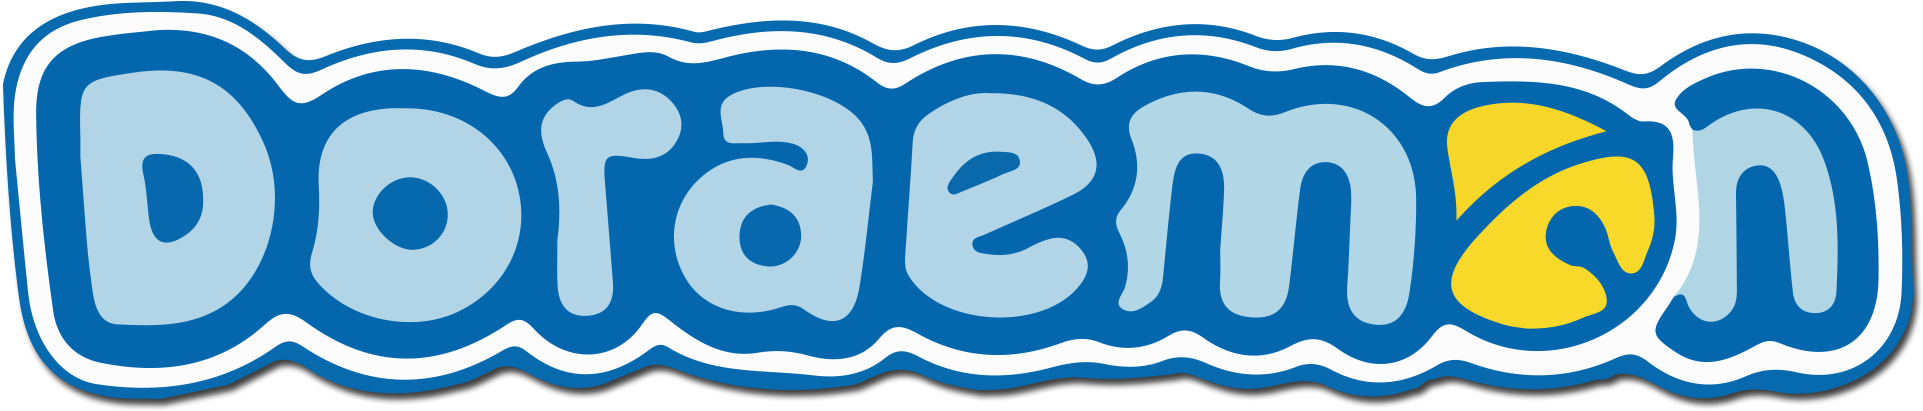 Doraemon Logo PNG Image Background